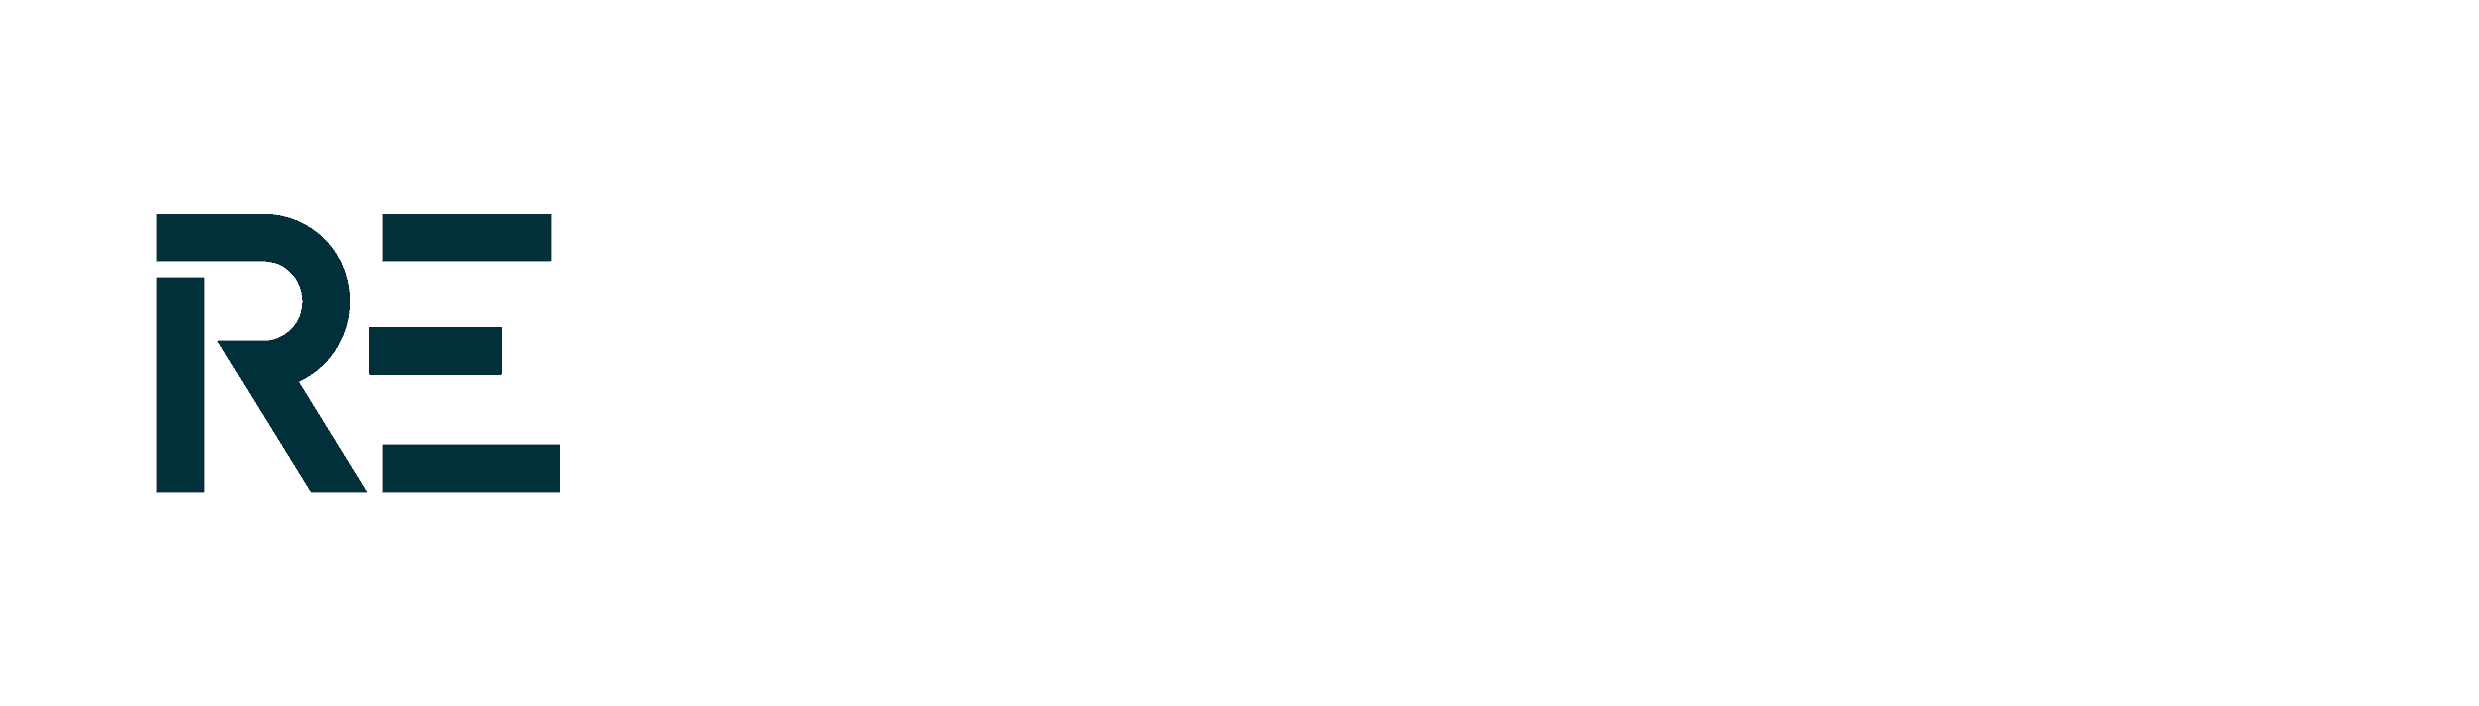 Rachel Evenden Mediation & Conflict Resolution Main Logo Design branding